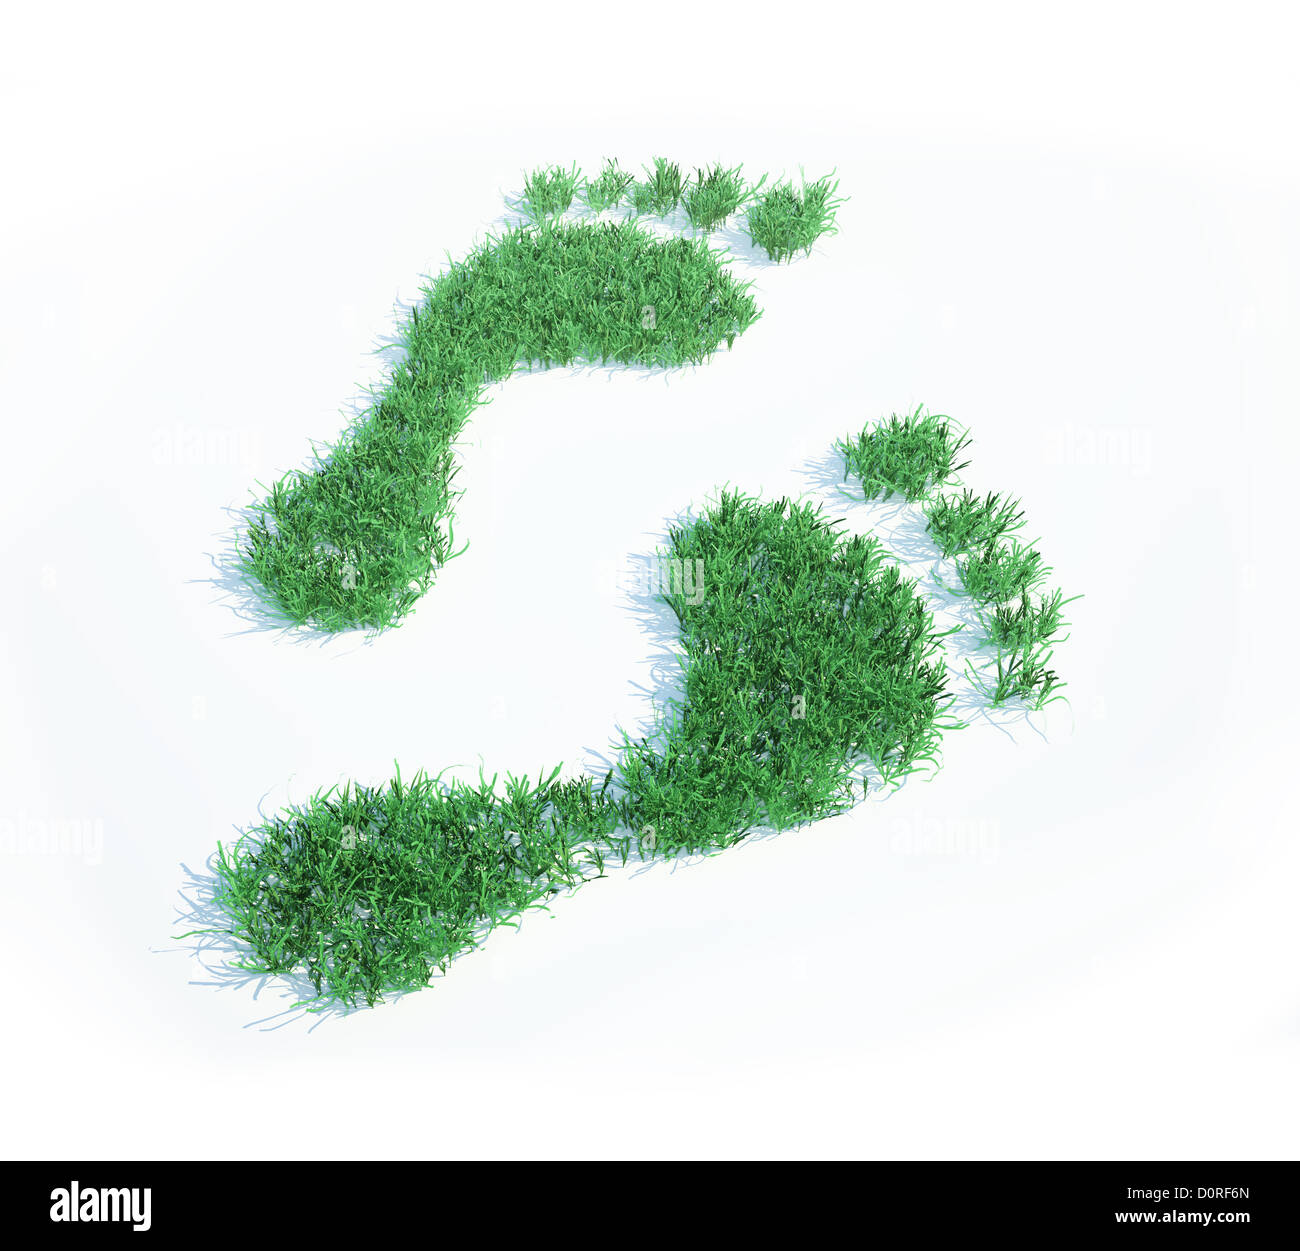 Ecological footprint Stock Photo